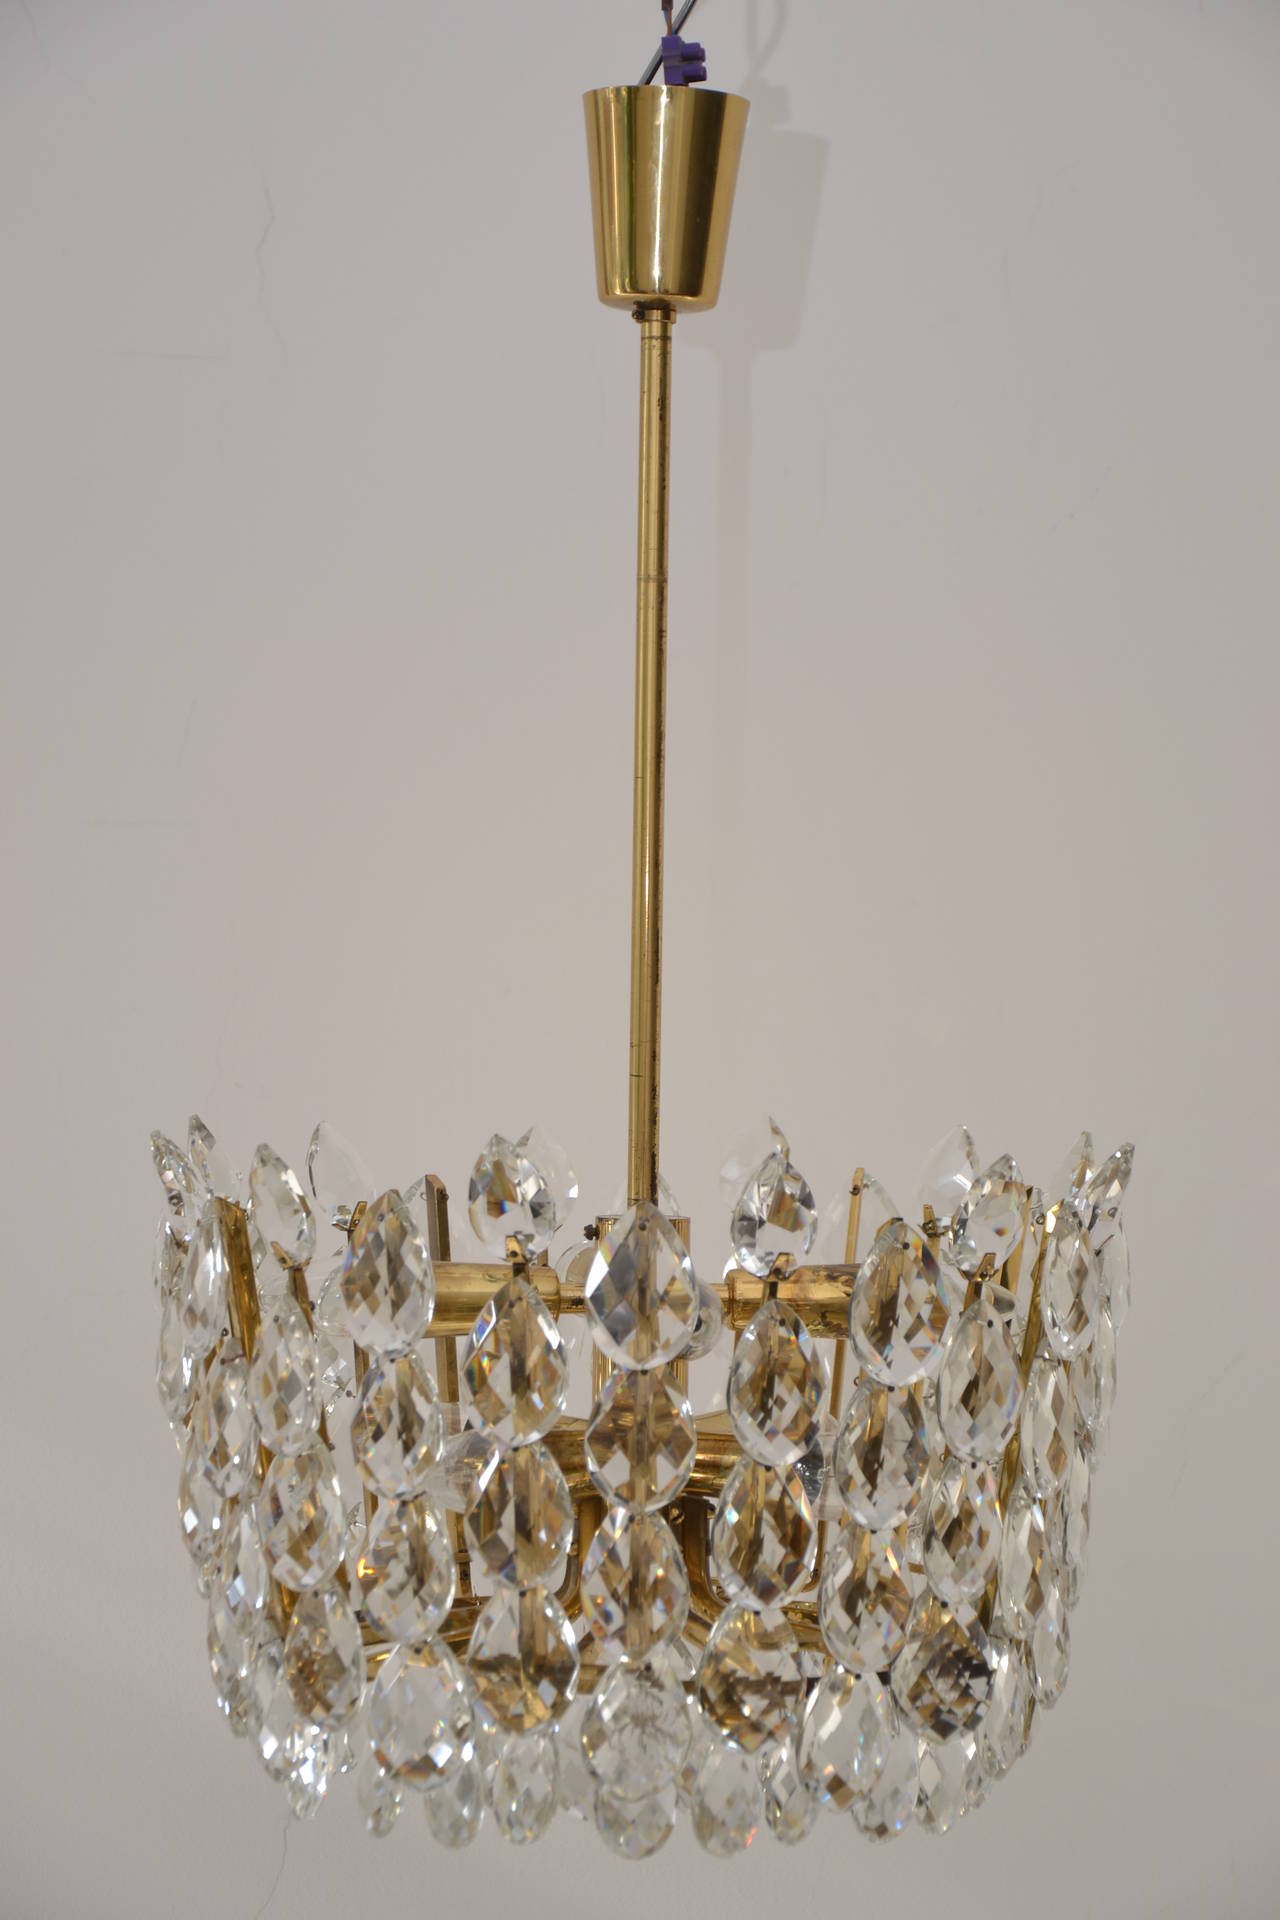 Impressionnant chandelier en cristal Bakalowits & Sohnne Vienna
Etat original